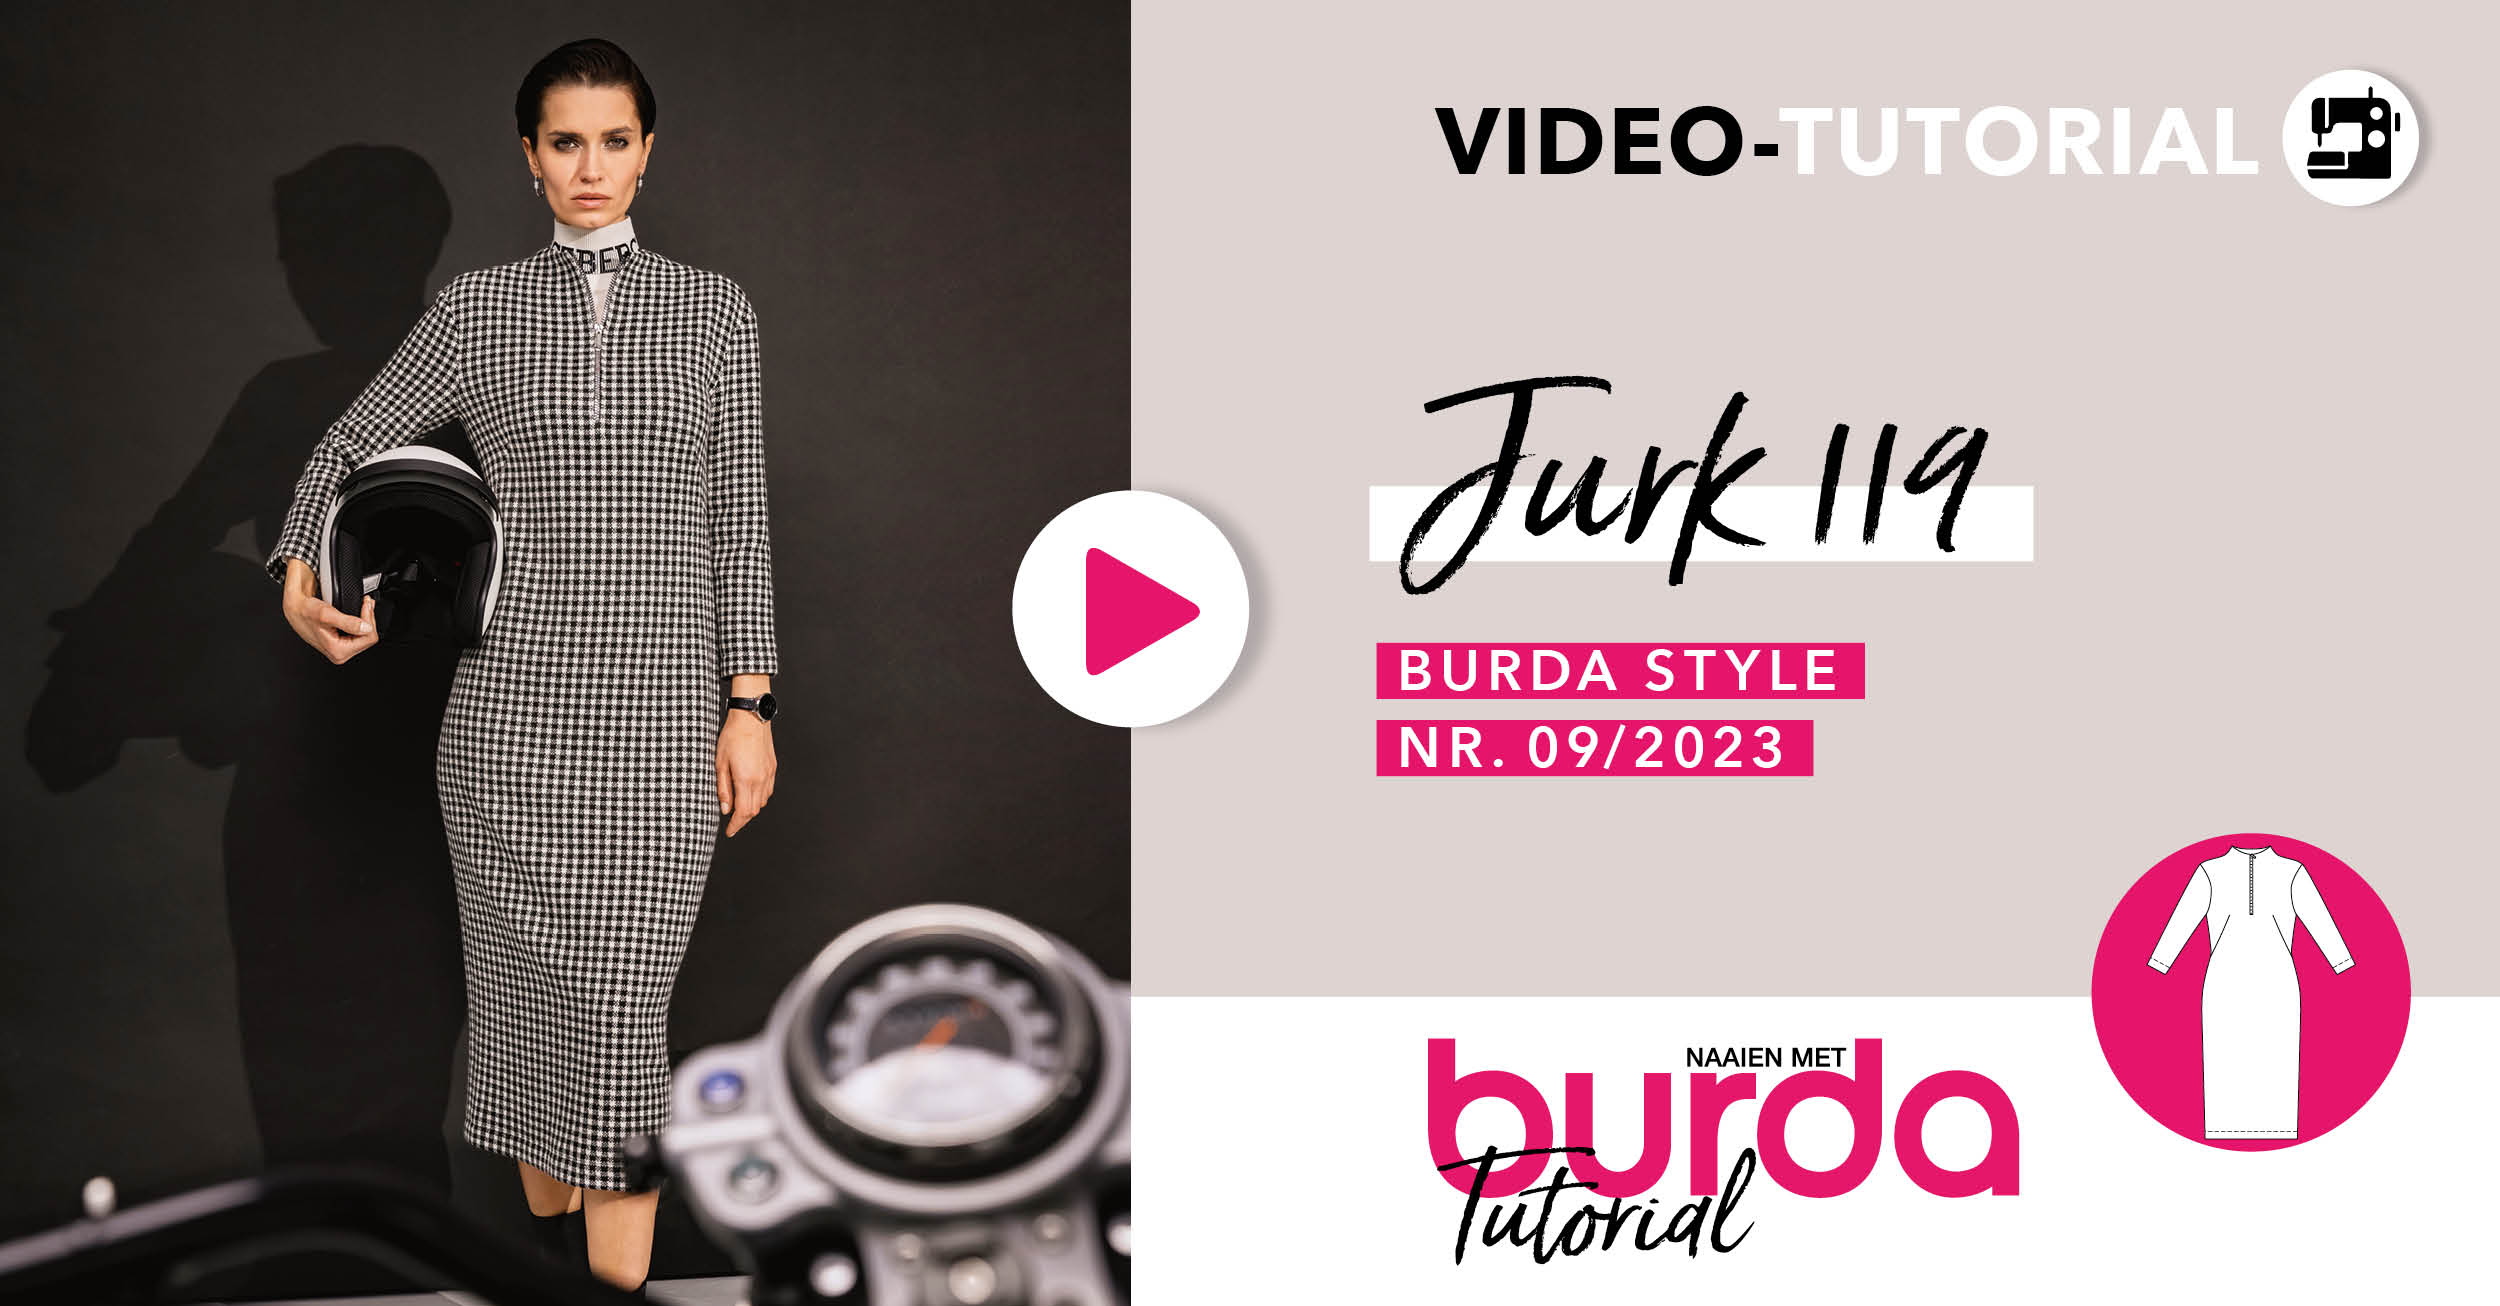 Video tutorial: jurk 119 - burda style september 2023